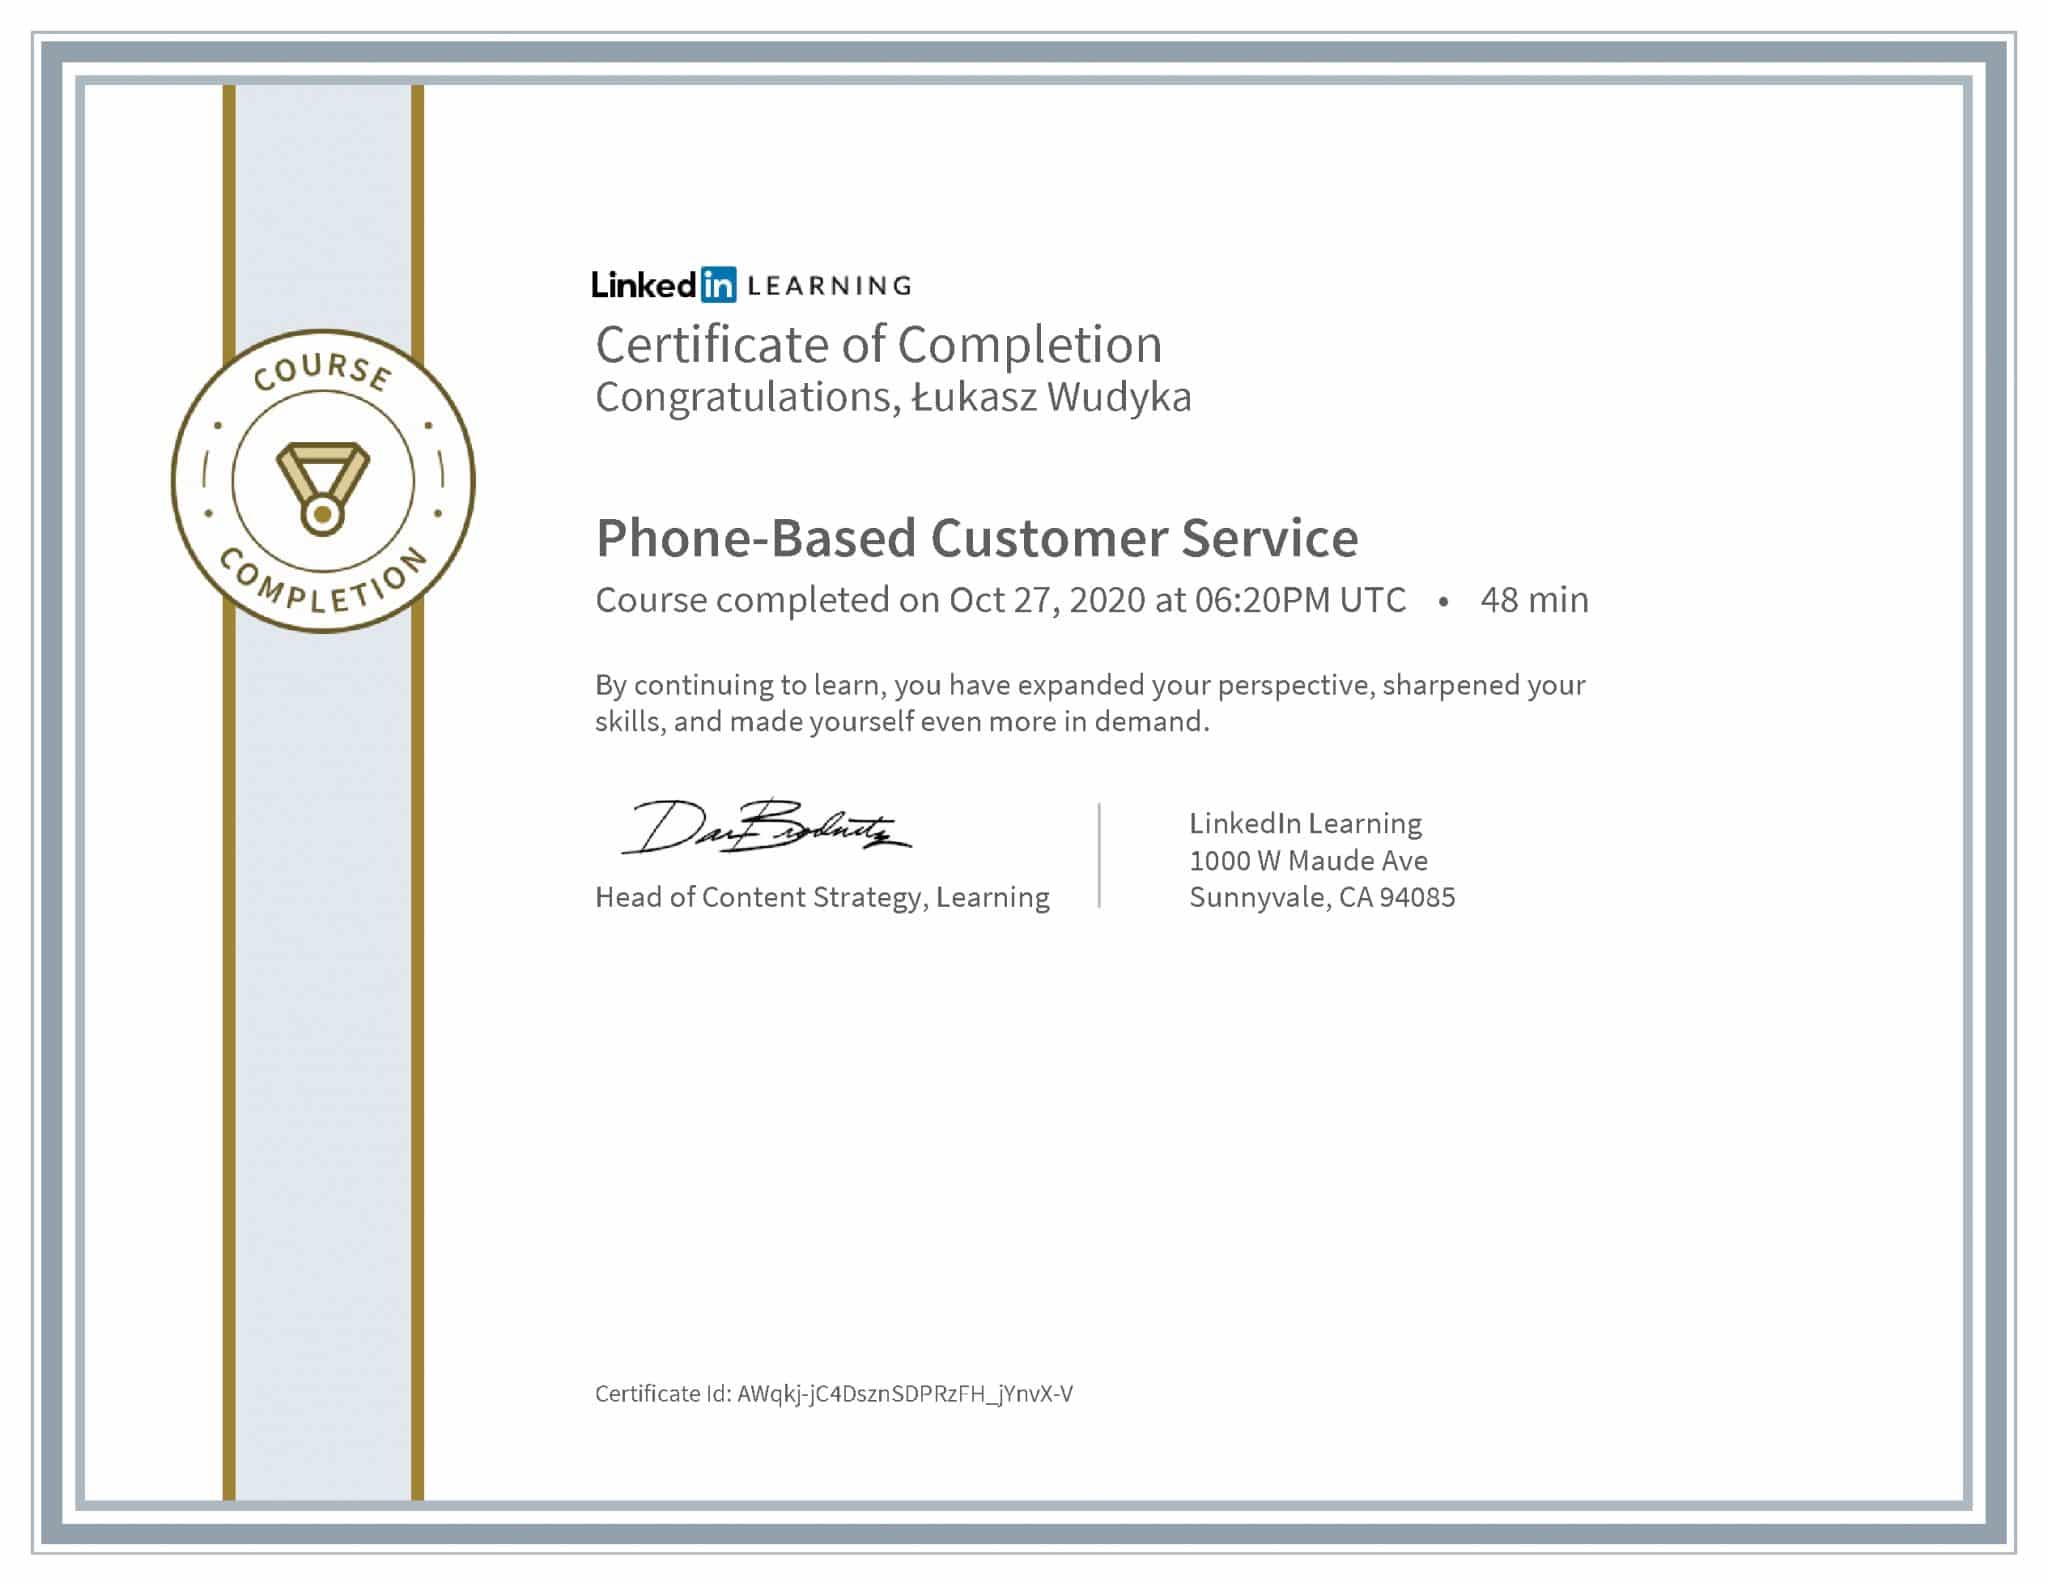 Łukasz Wudyka certyfikat LinkedIn Phone-Based Customer Service